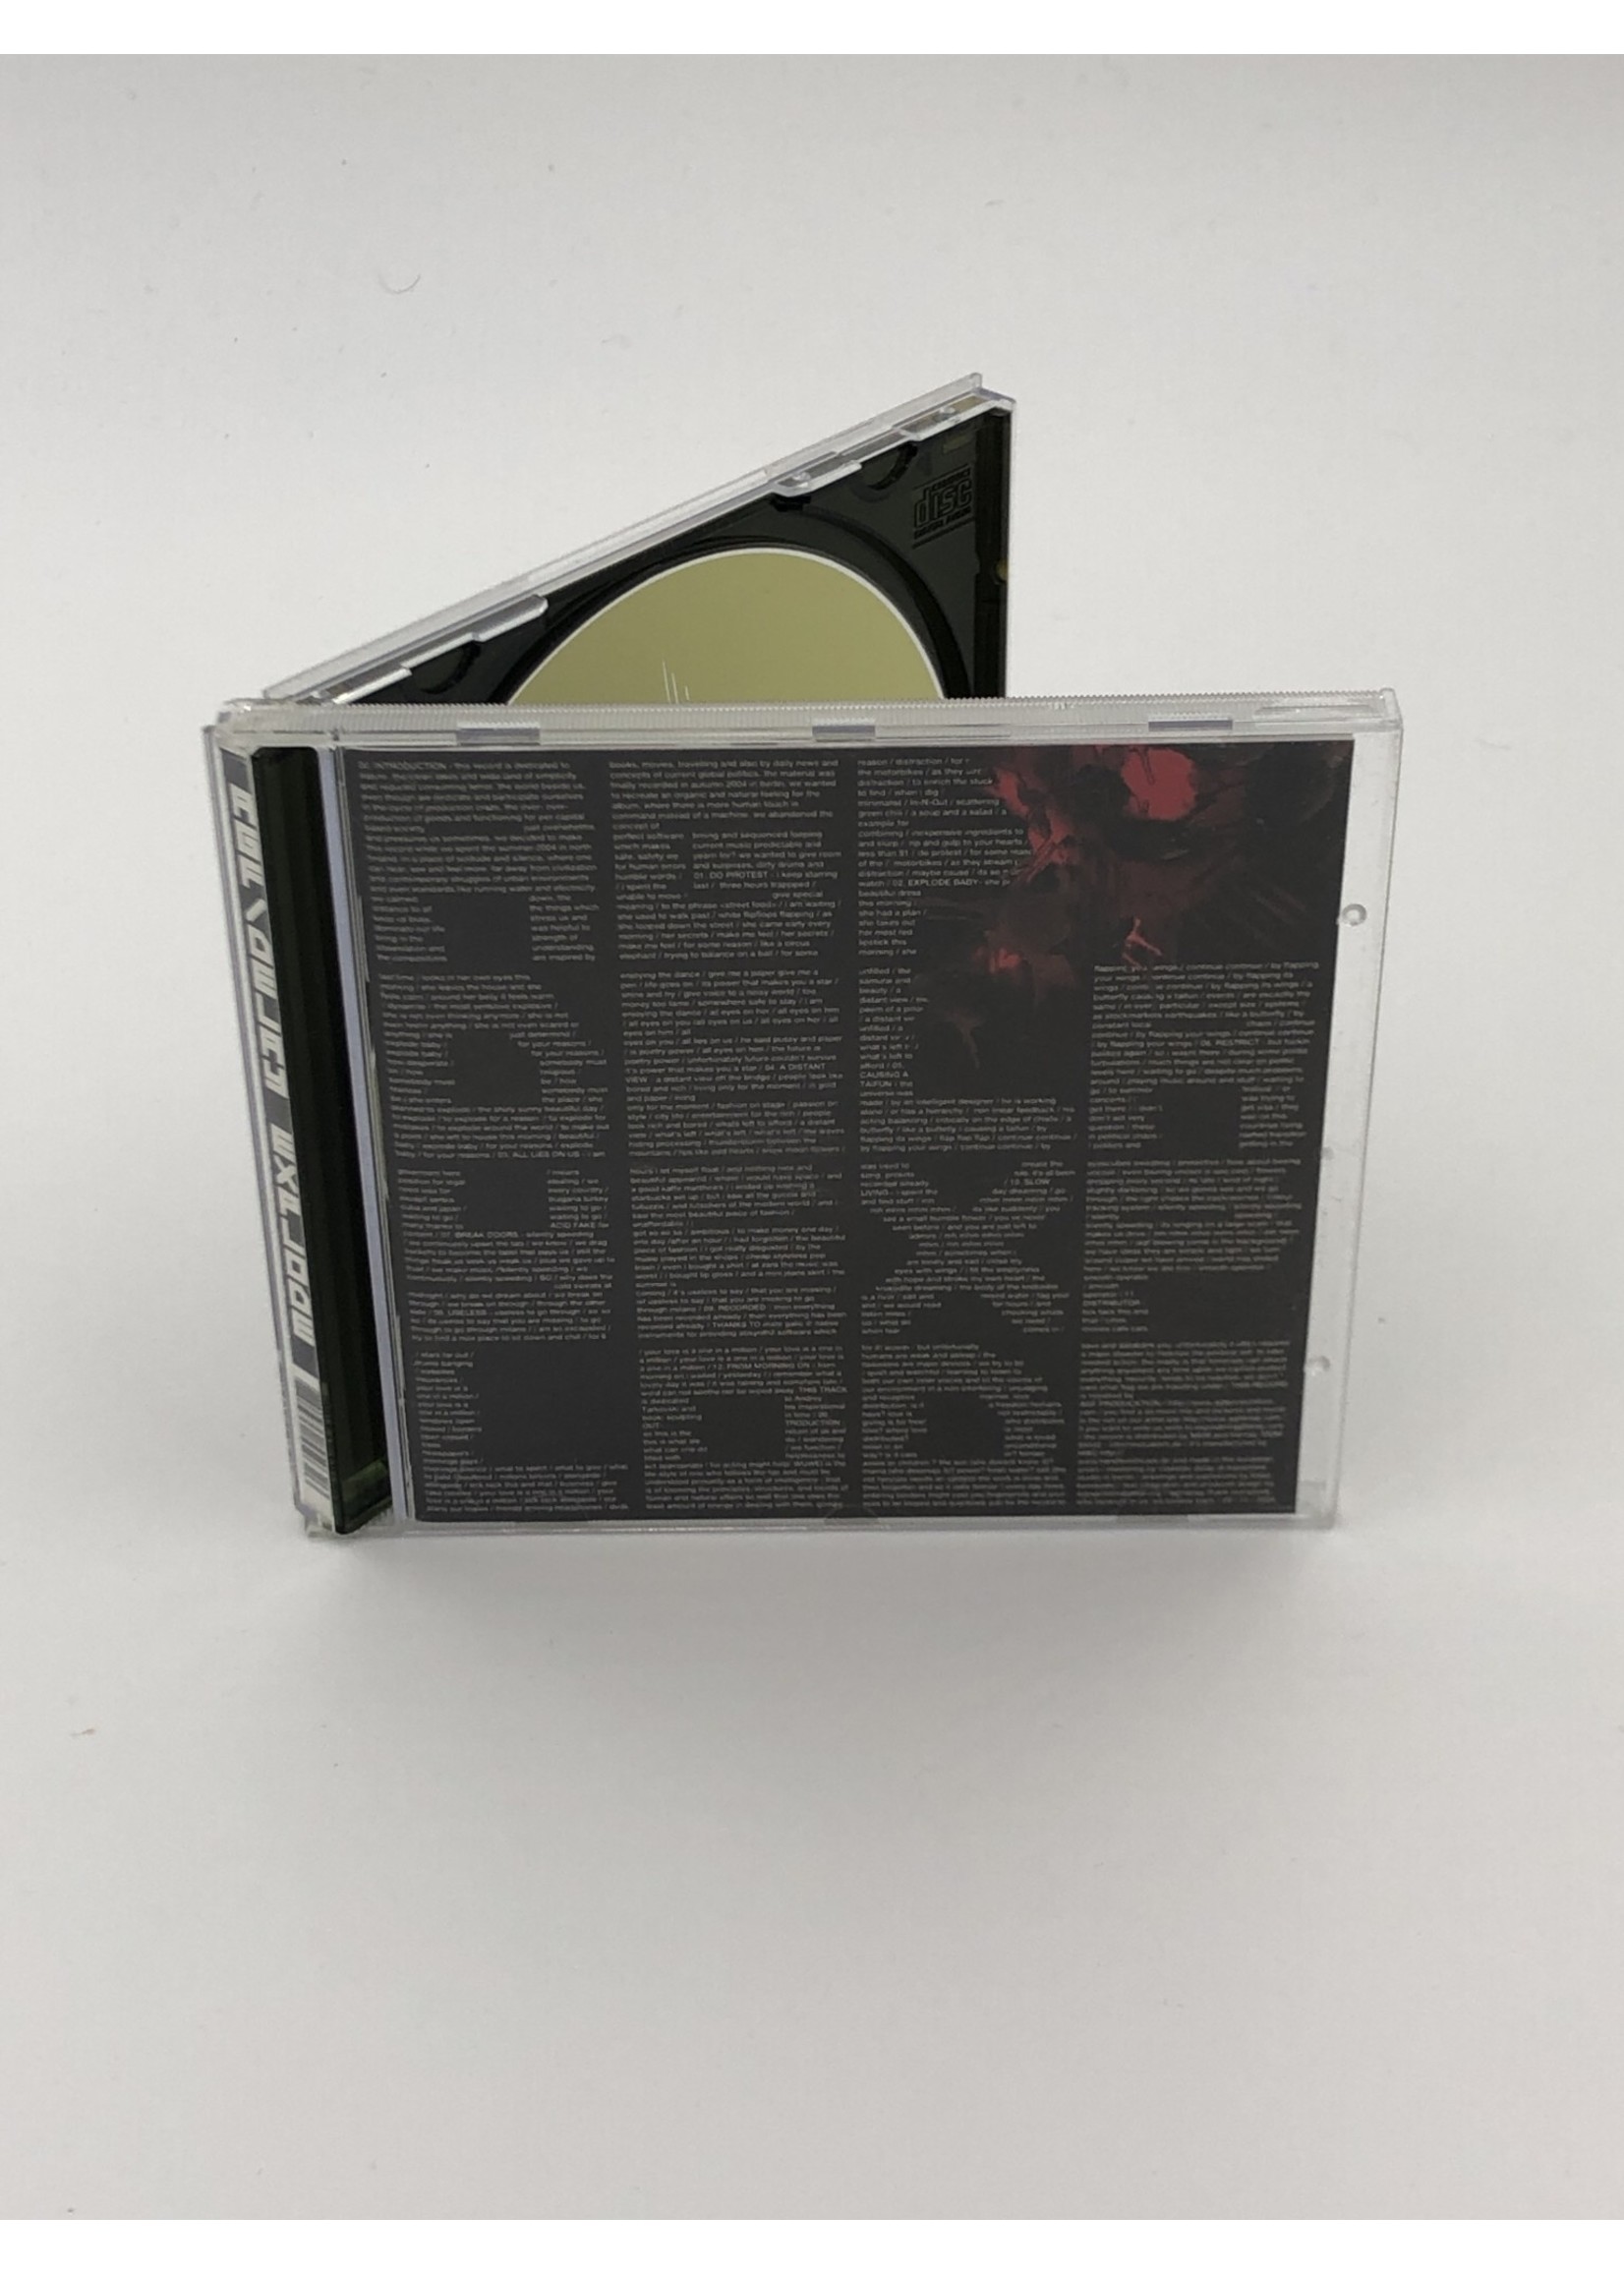 CD AGF-DELAY: Explode CD